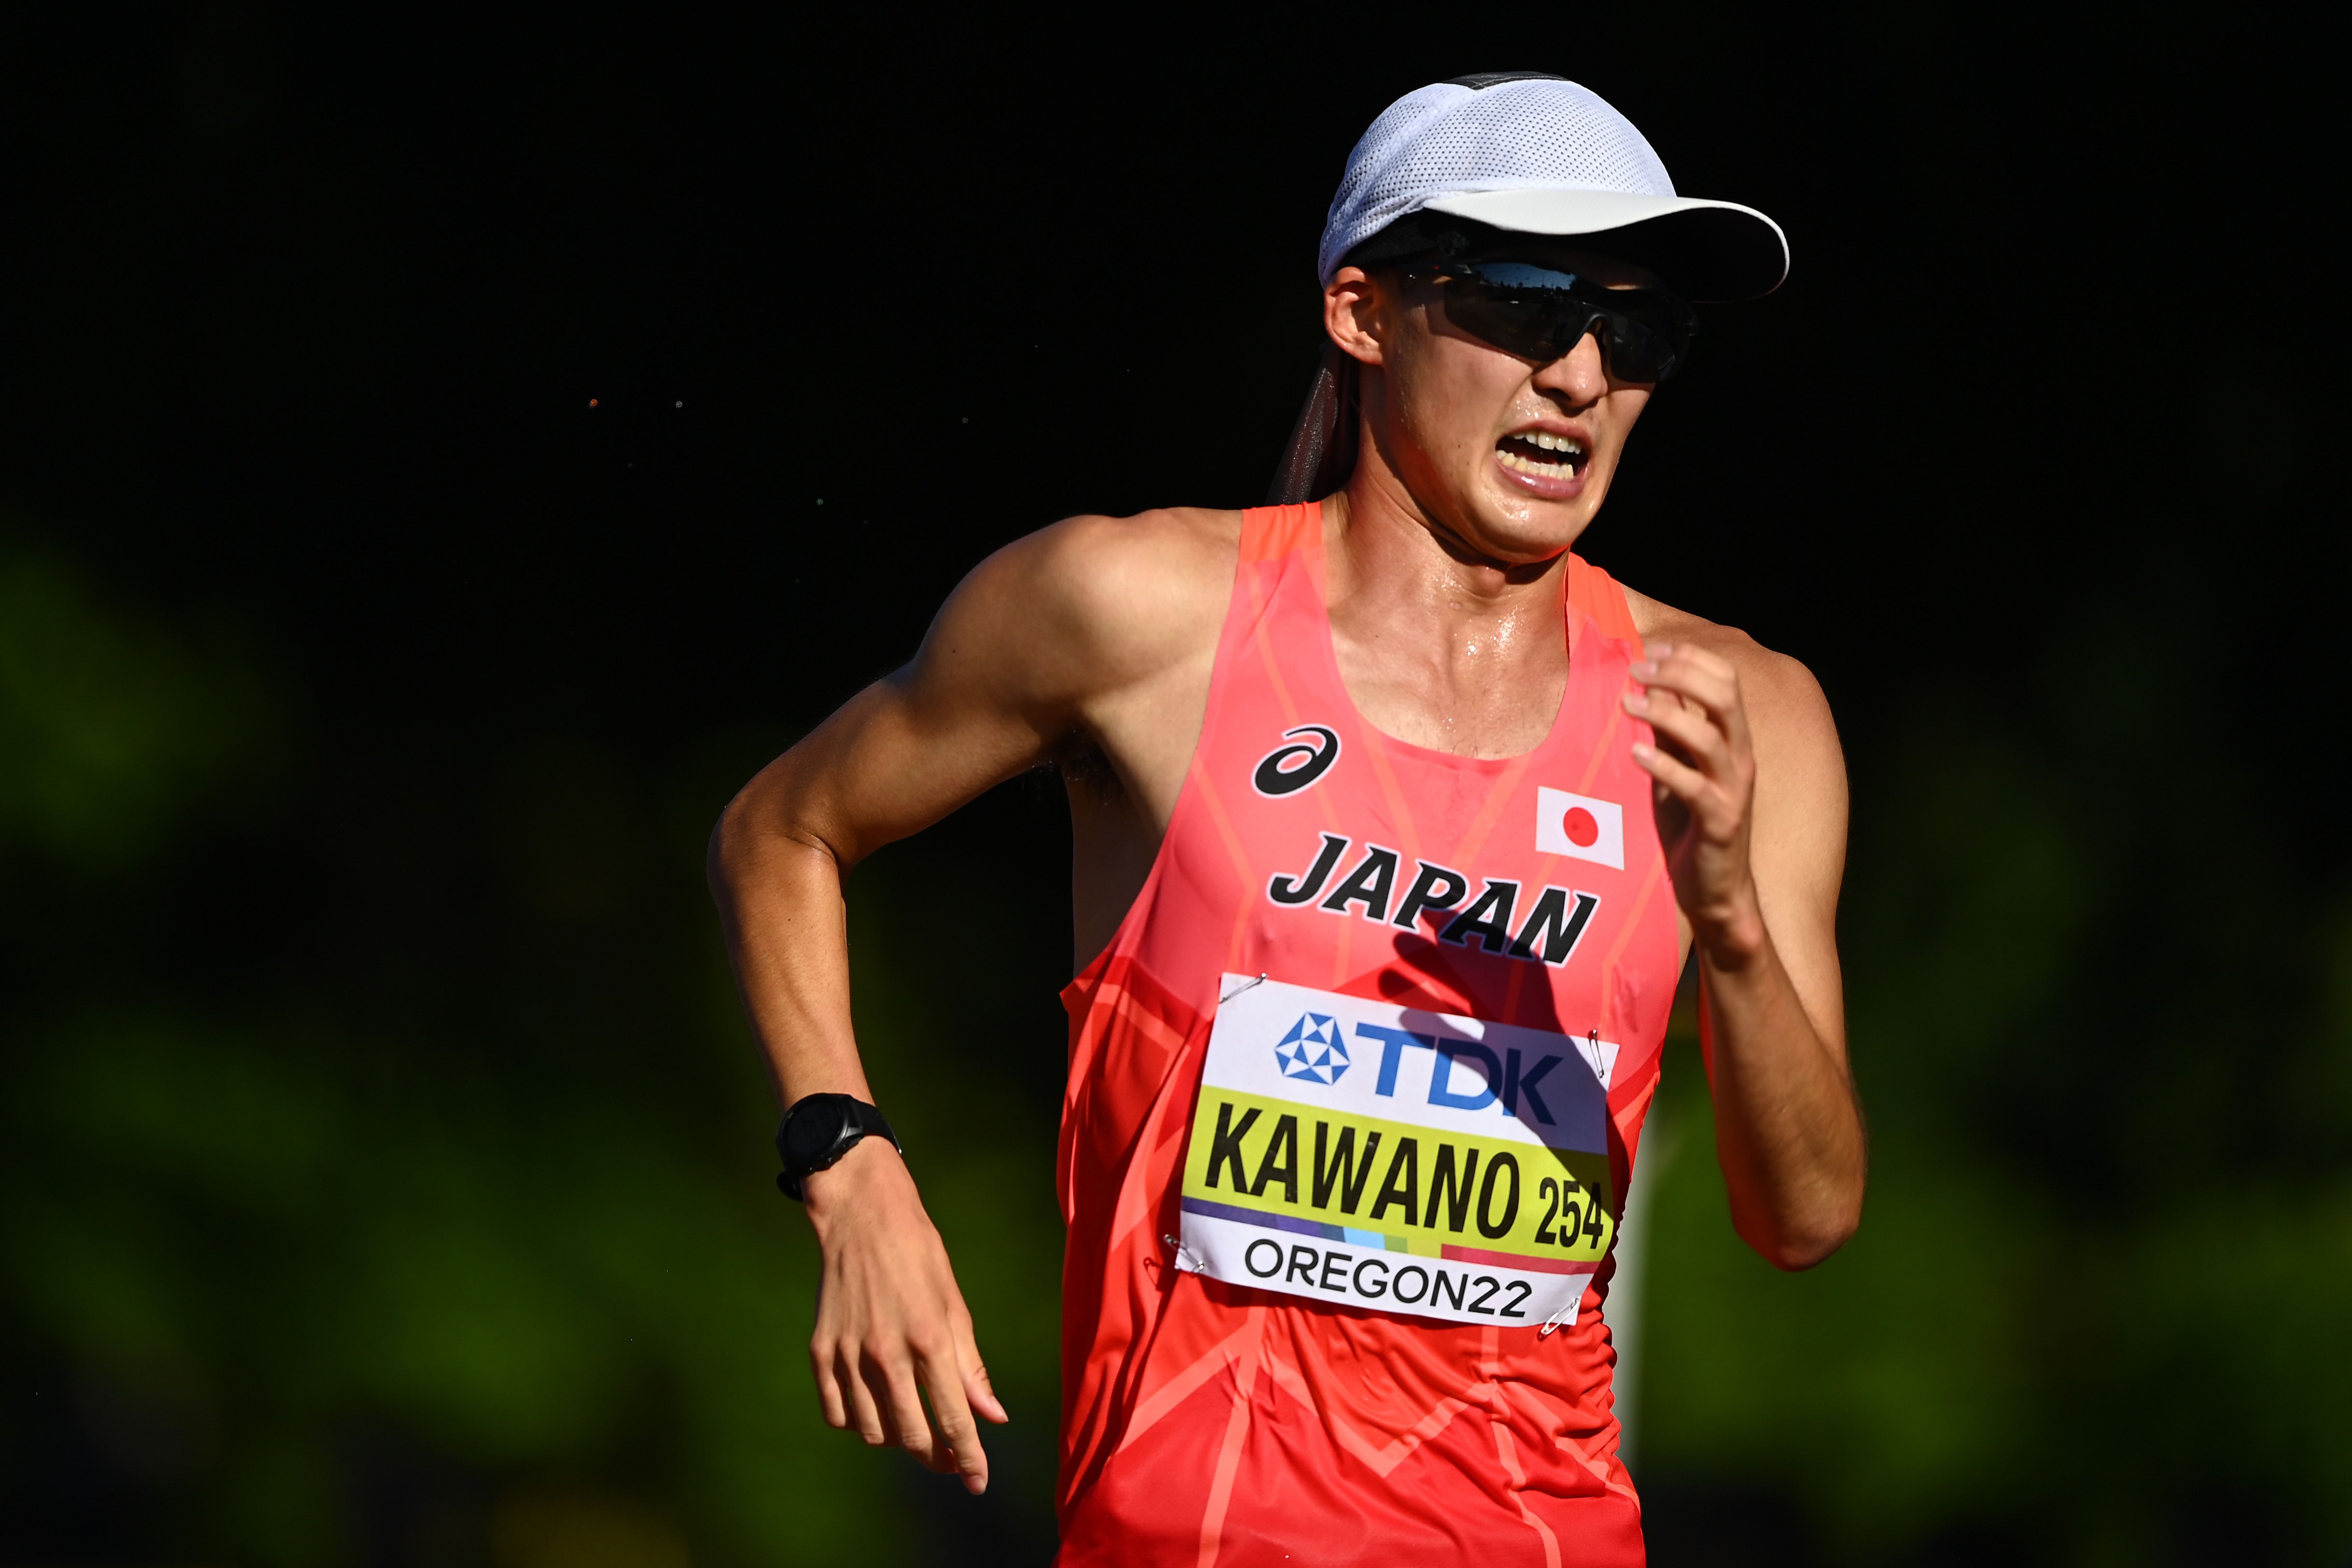 Masatora Kawano at the World Athletics Championships Oregon22